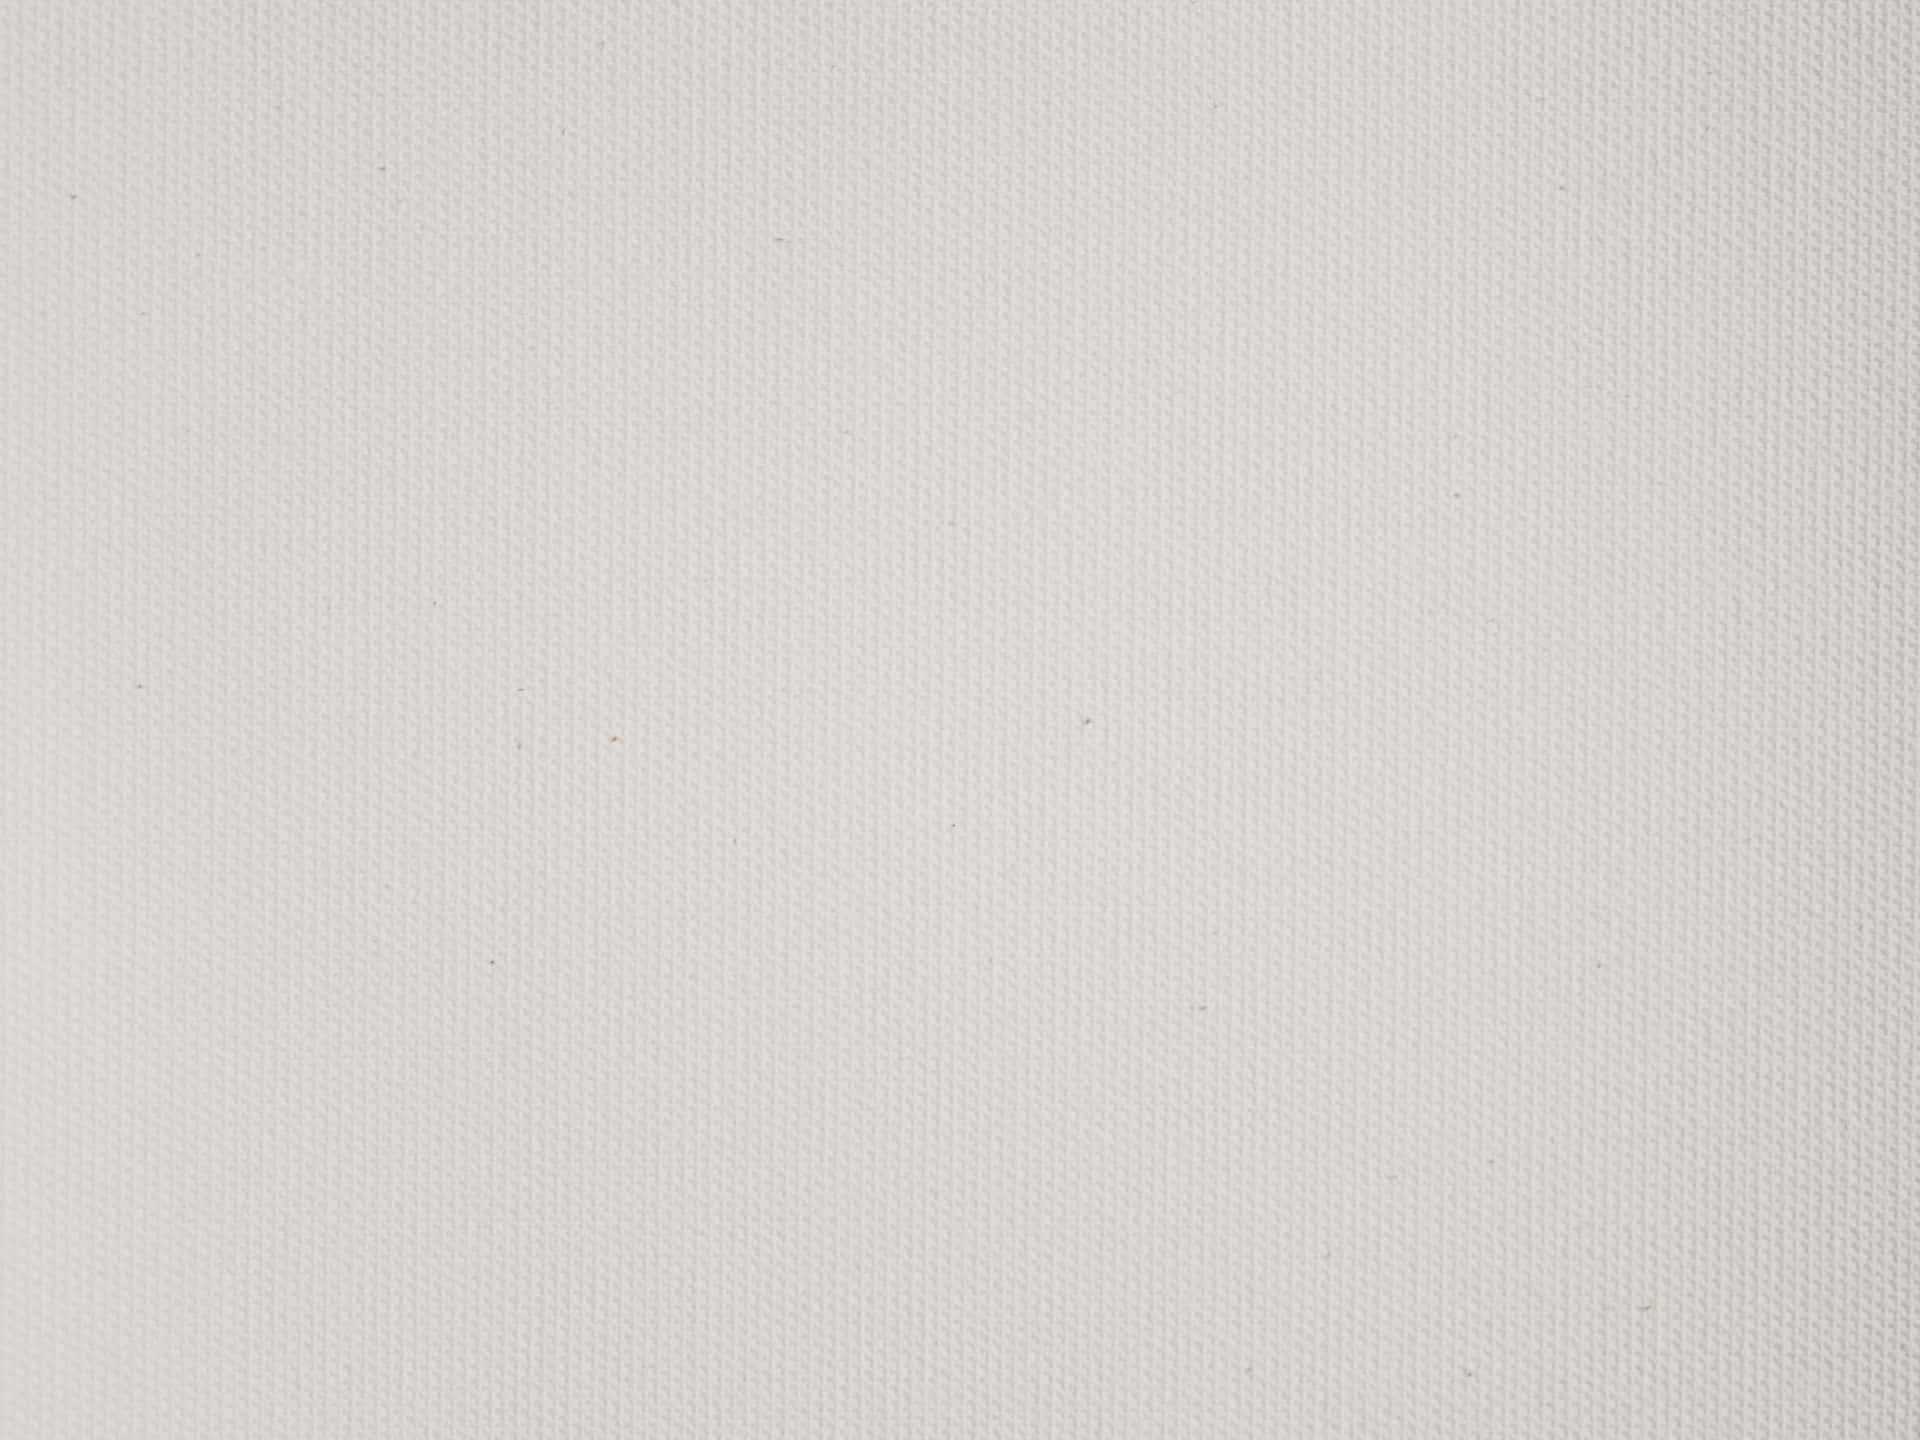 Clean White Fabric Texture Wallpaper